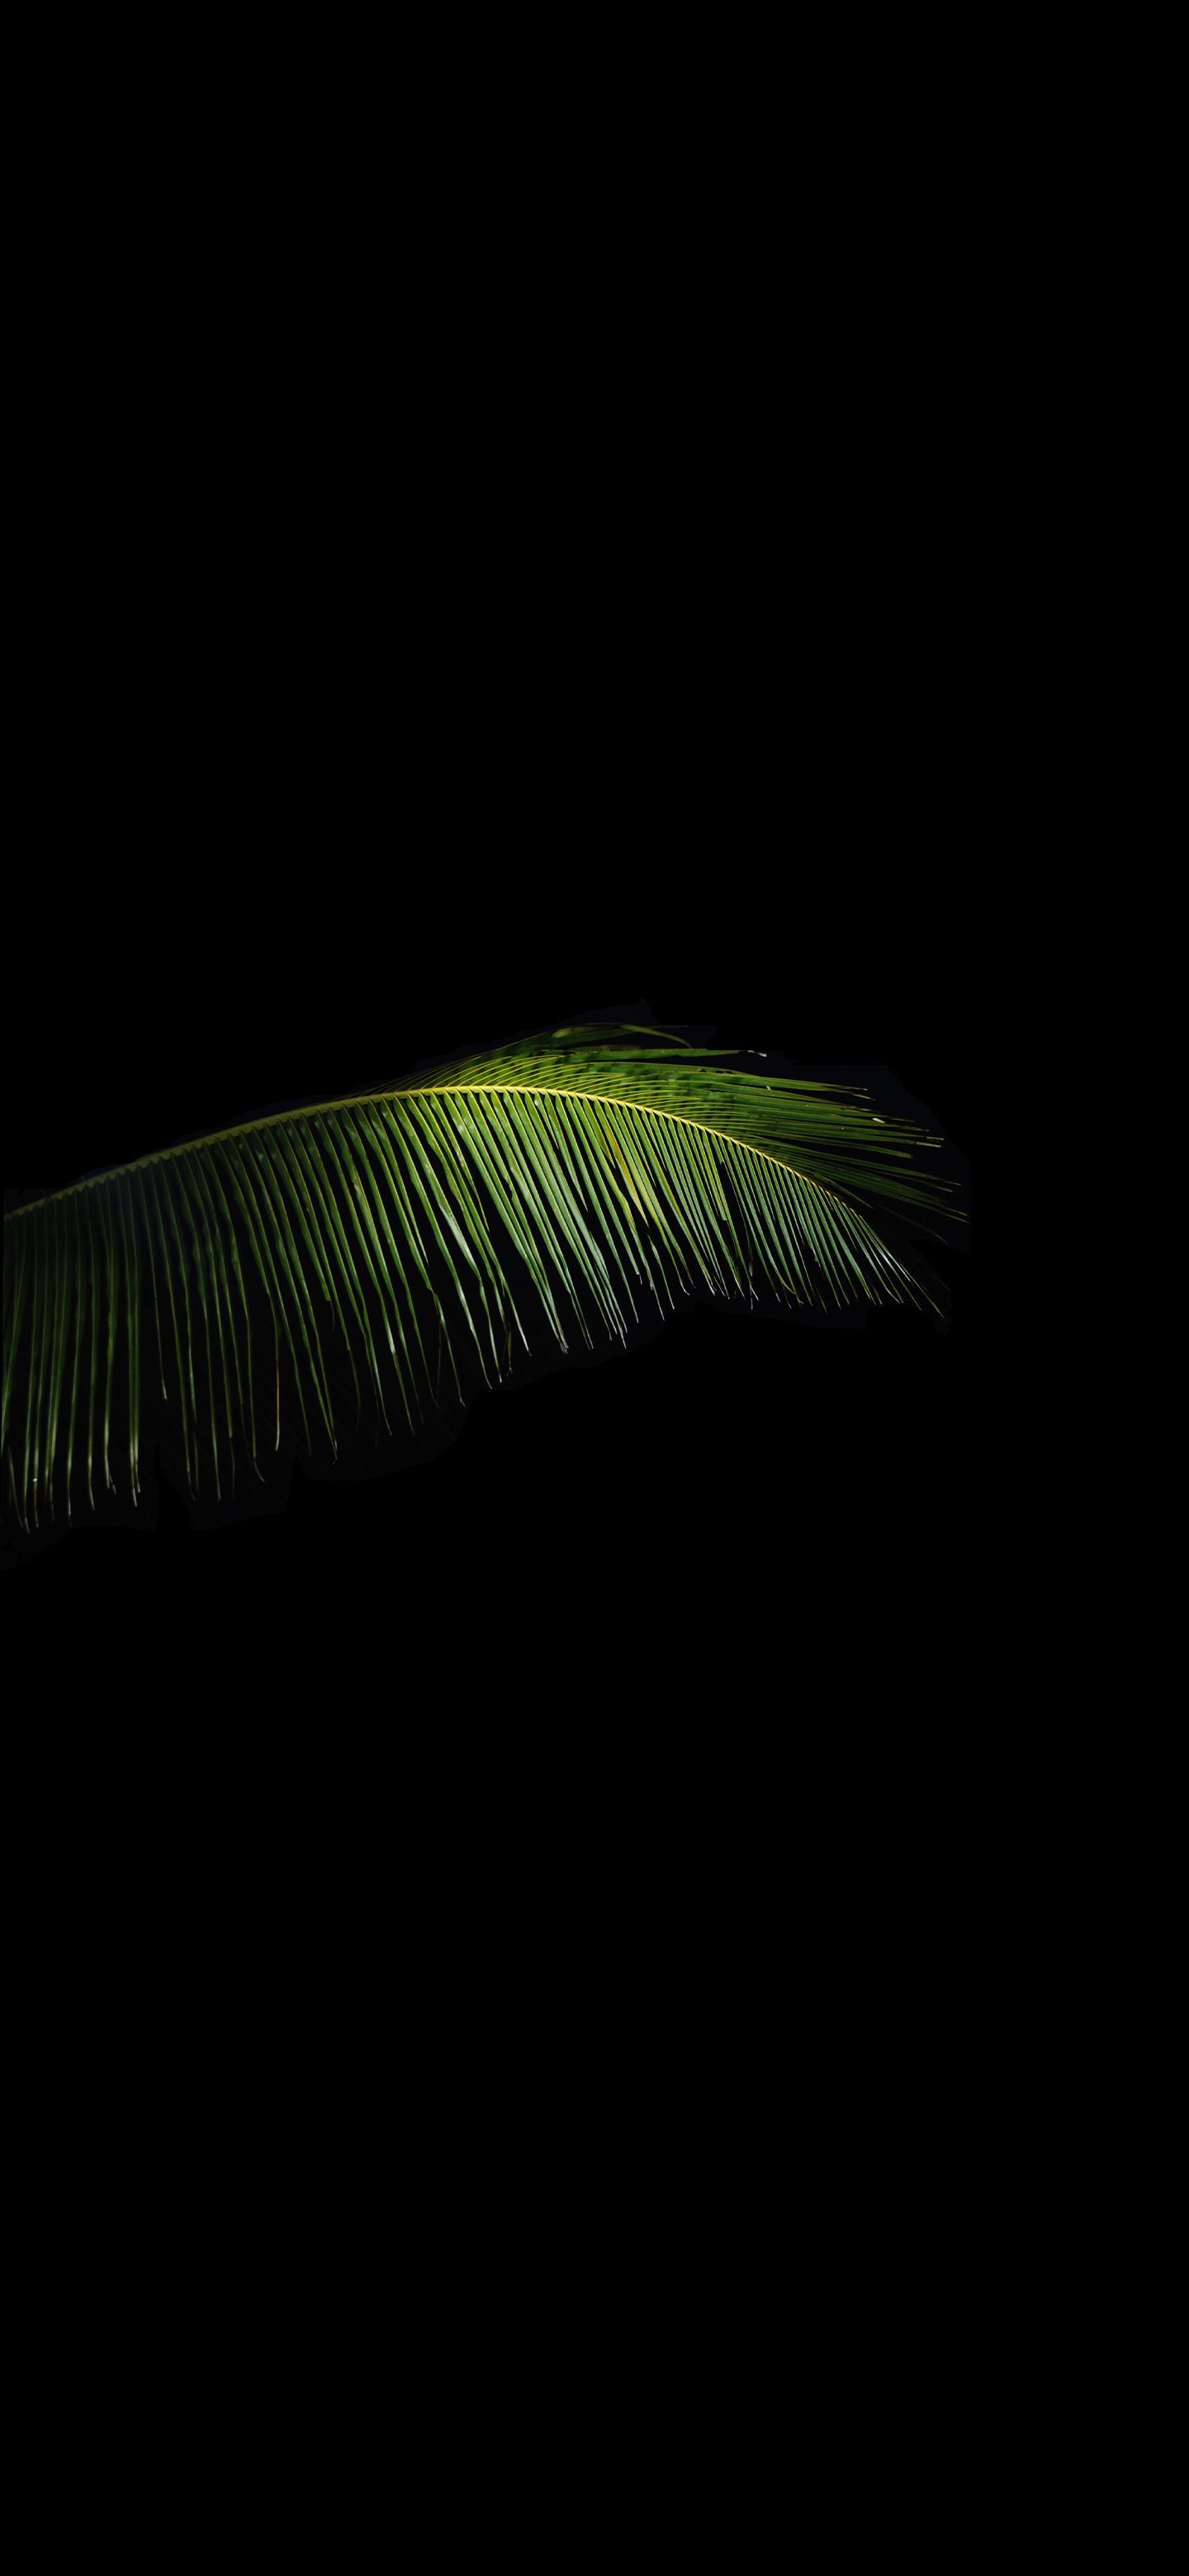 Single palm leaf. Wallpaper, Palm leaves, Leaf nature